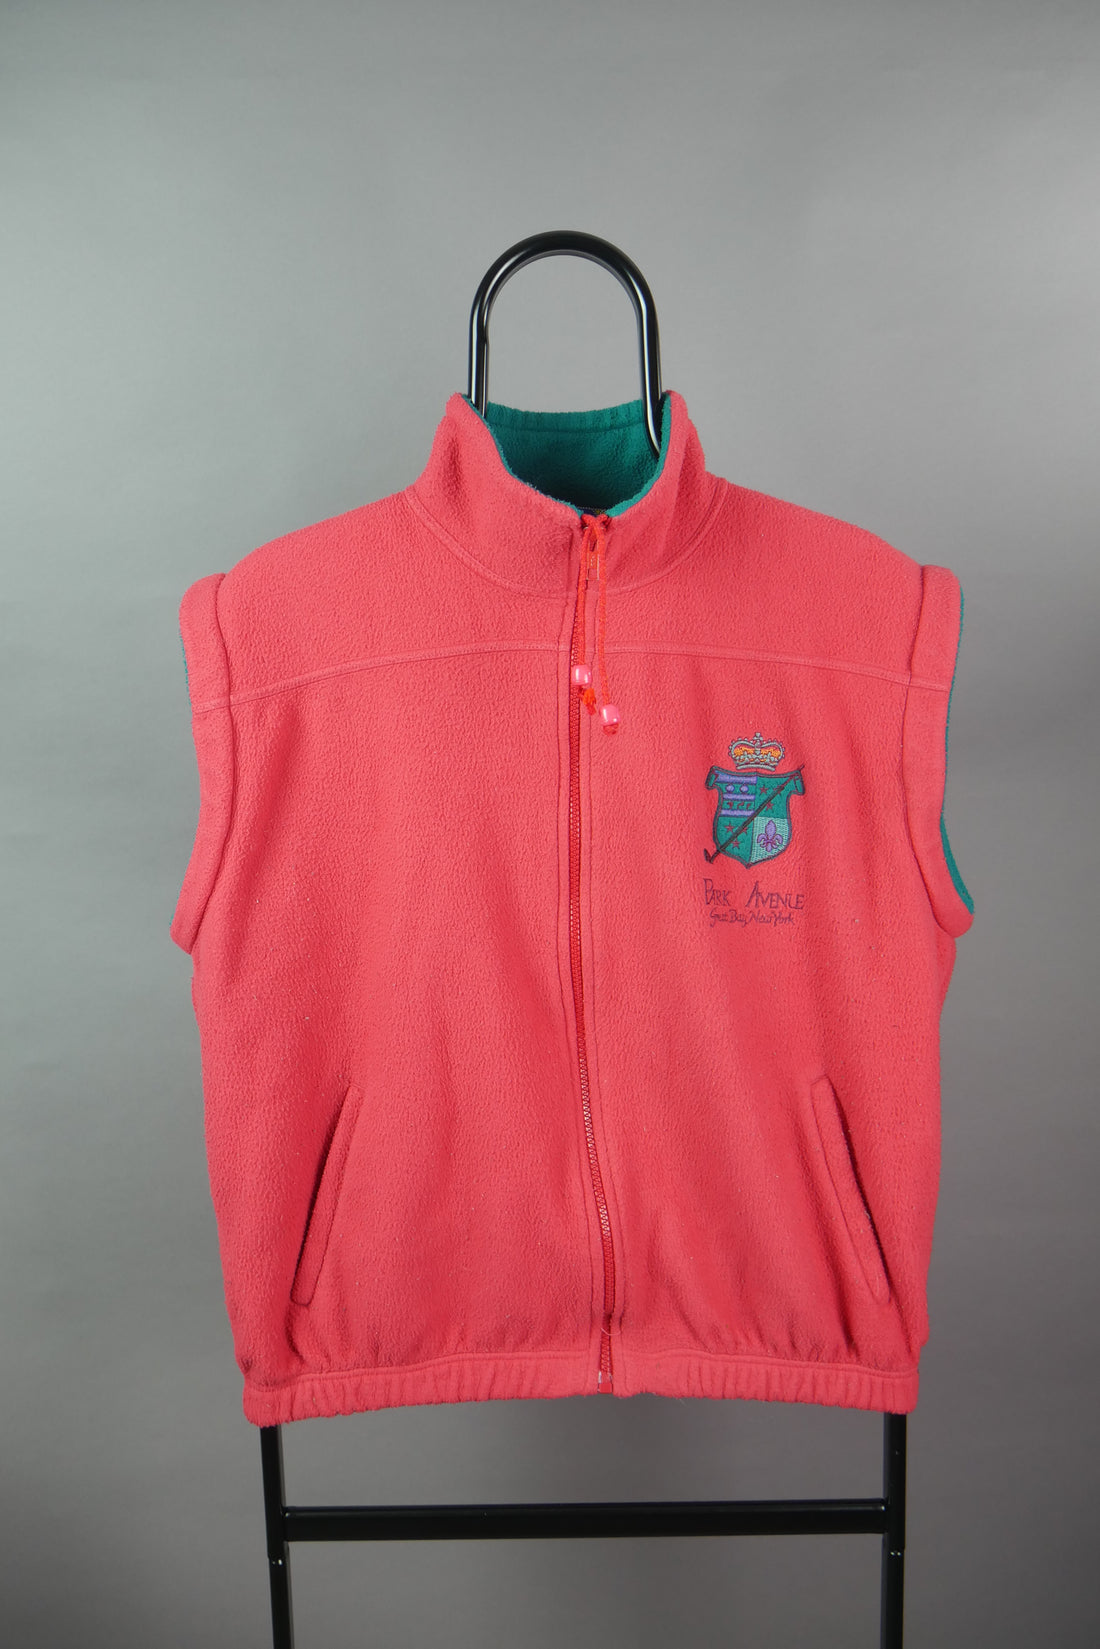 The Vintage Golf Fleece Gilet (Women's L)